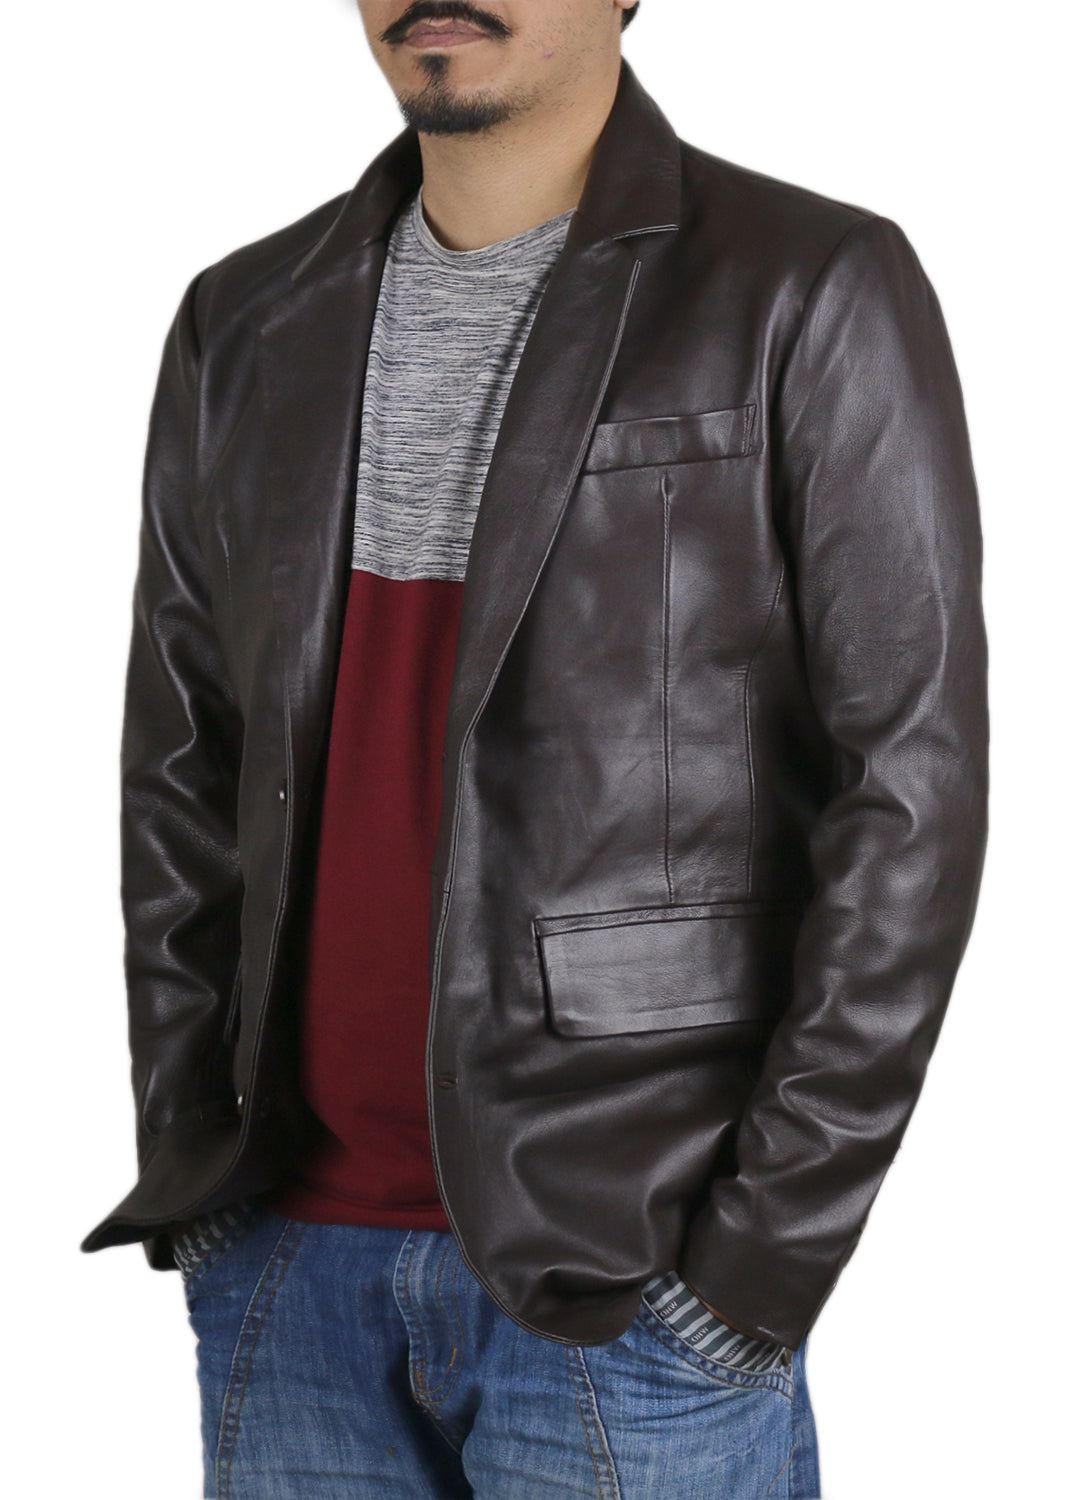 Leather Jackets Hub Mens Genuine Lambskin Leather Coat (Black, Blazer Jacket) - 1501830